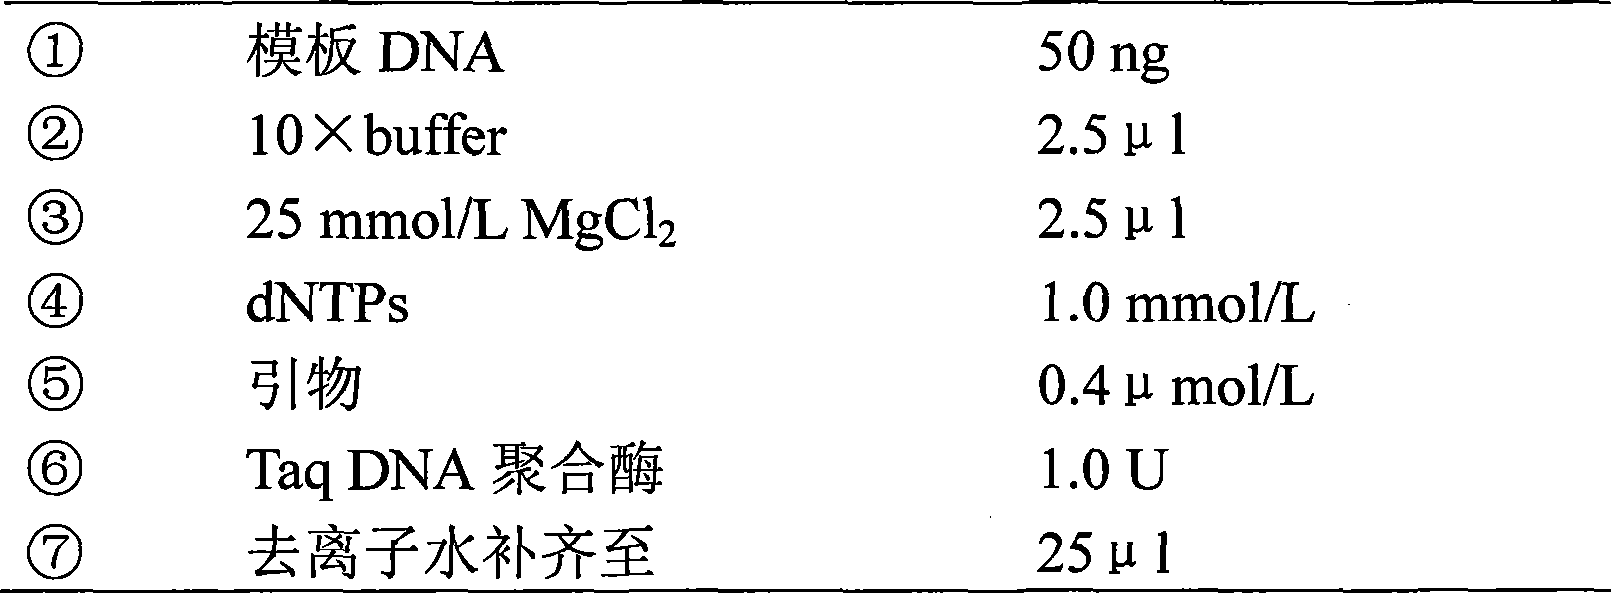 Molecular identification method for siniperca chuatsi and siniperca scherzeri and kit